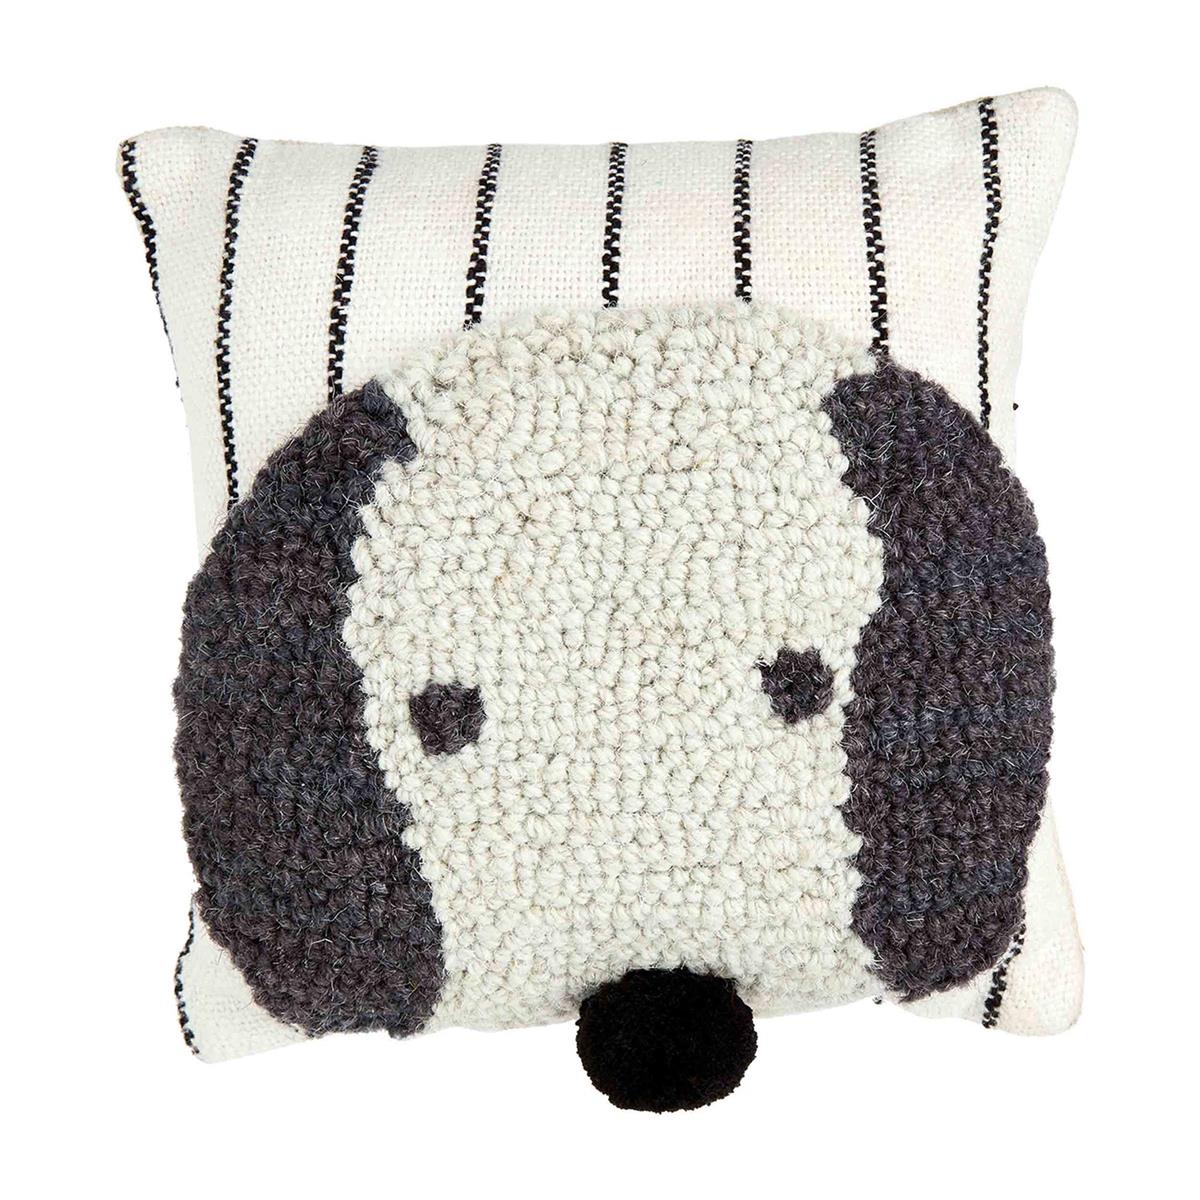 Mini Hooked Dog Pillows